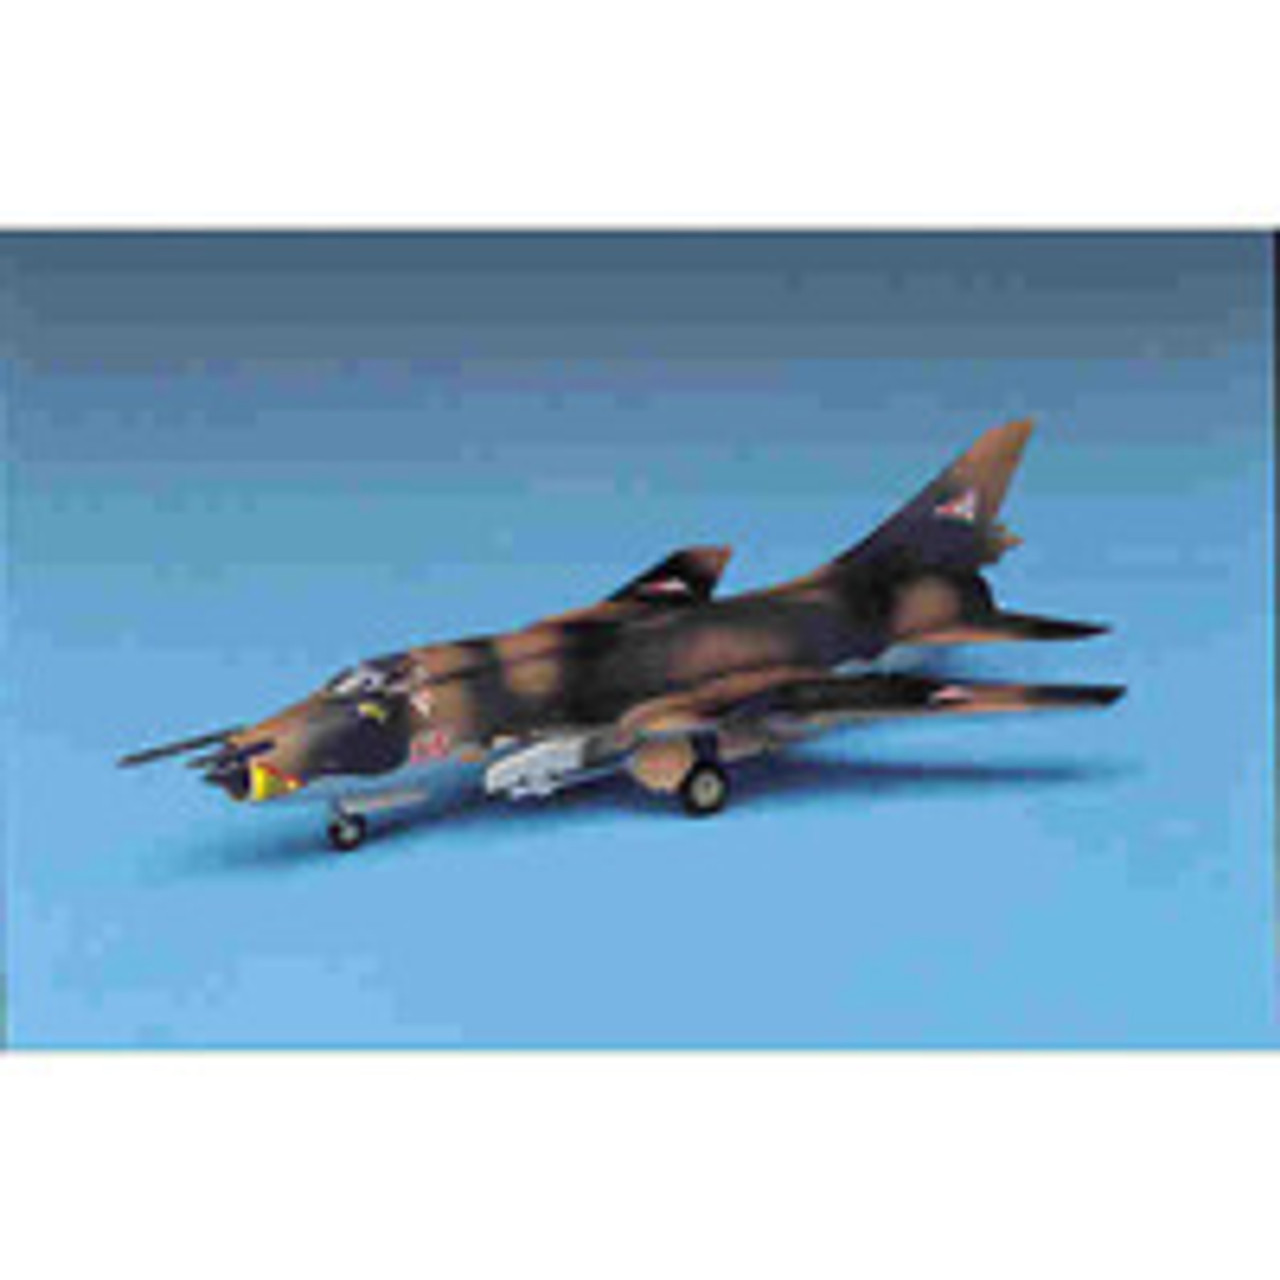 Academy 4438 1/144 SU22 Fitter Fighter Plastic Model Kit